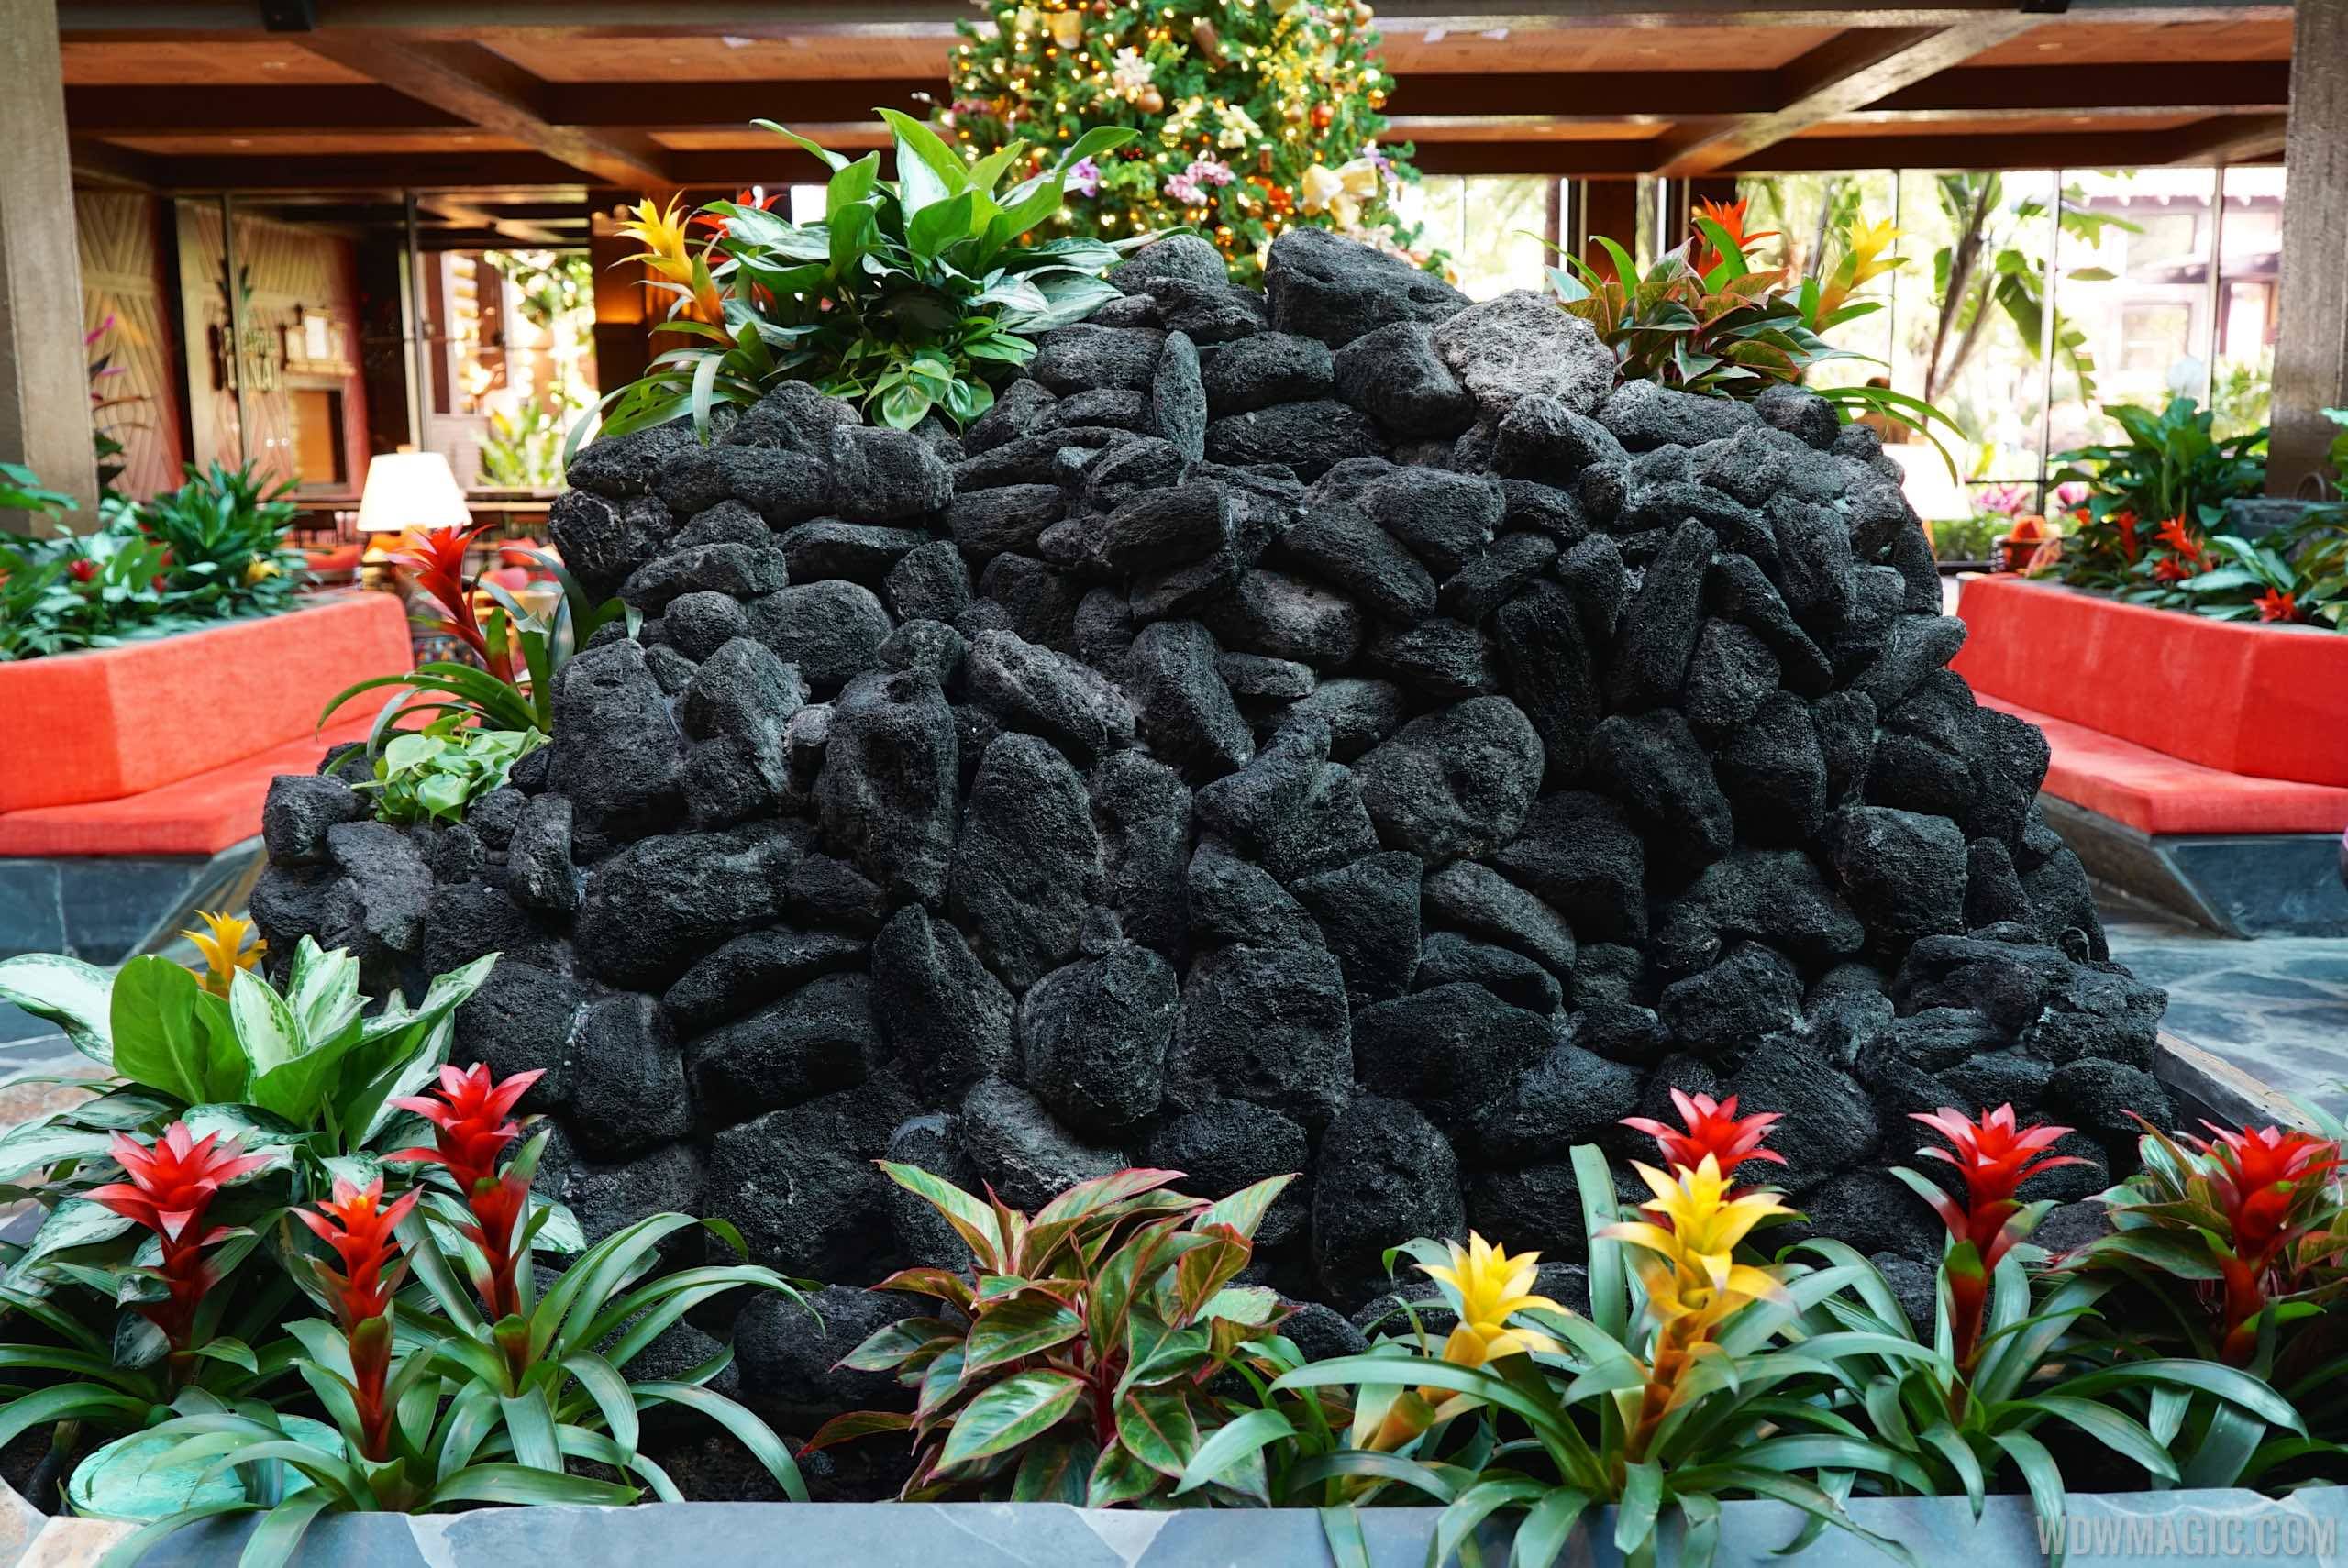 PHOTOS - A tour of the new Polynesian Village Resort lobby